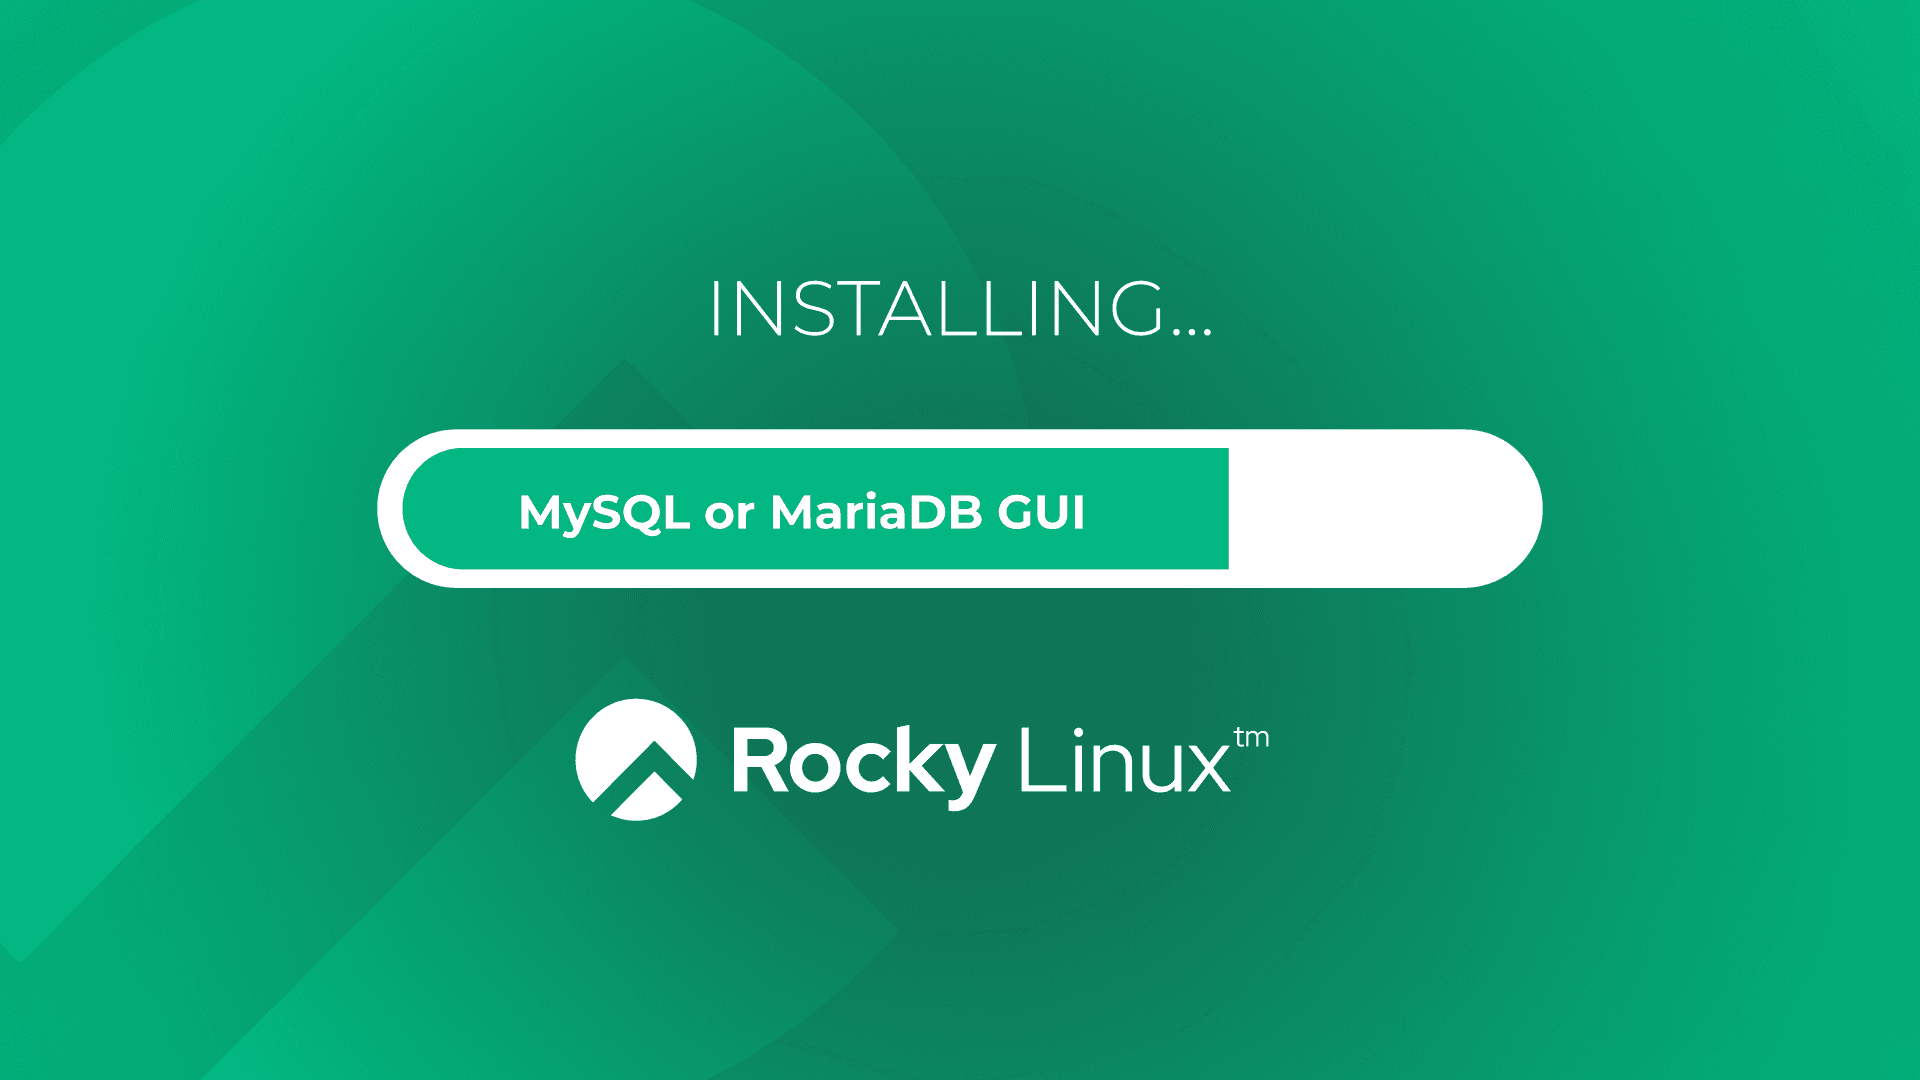 How to Install the phpMyAdmin Web-Based MySQL or MariaDB GUI on Rocky Linux